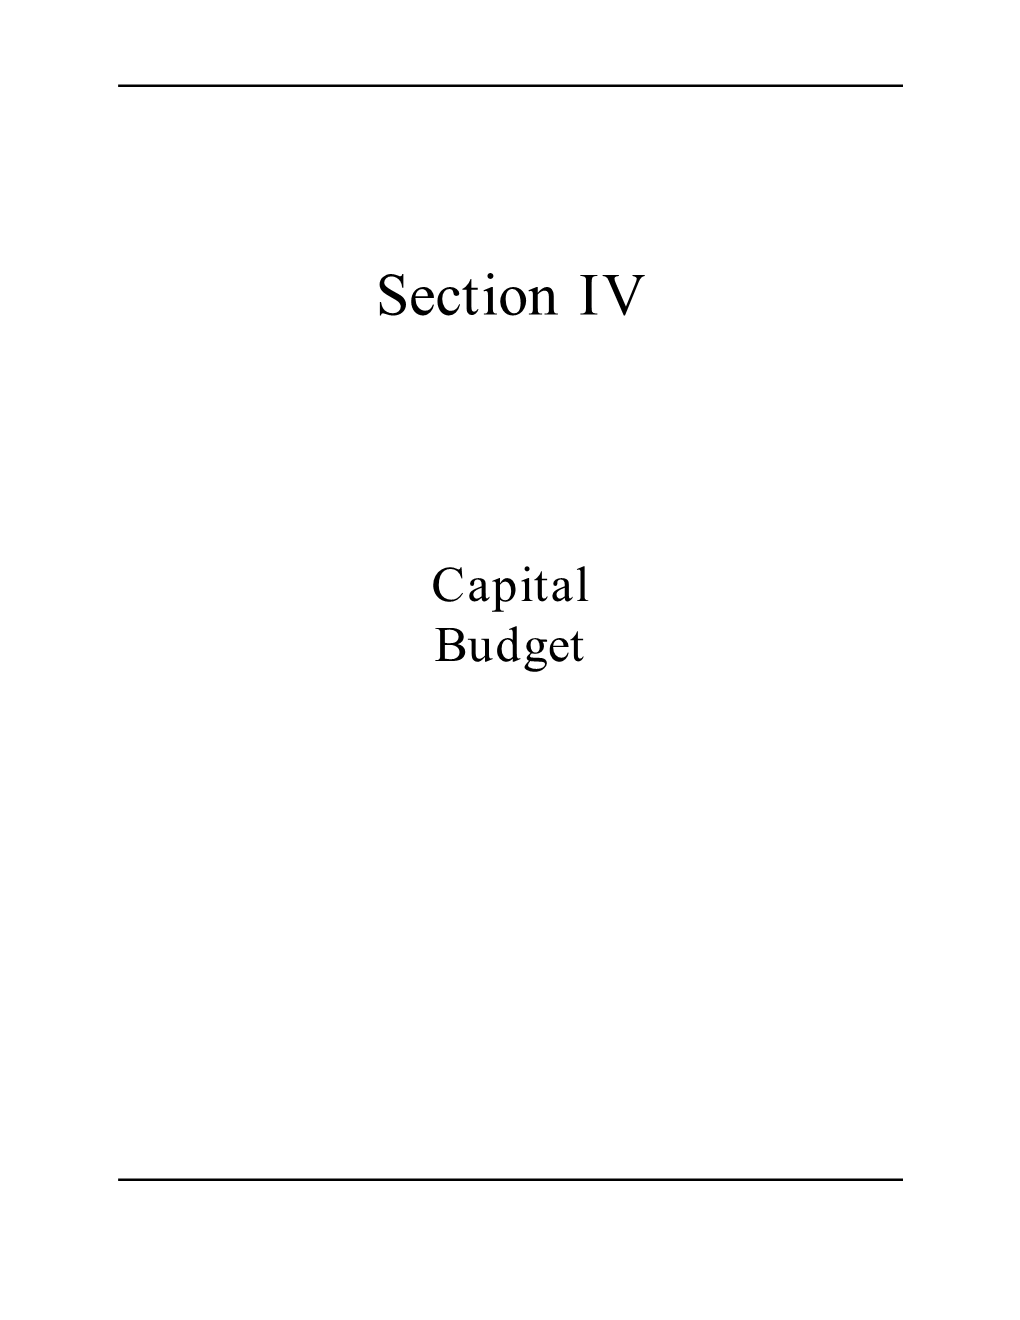 WEB FY 2015 BA Section IV Capital Budget